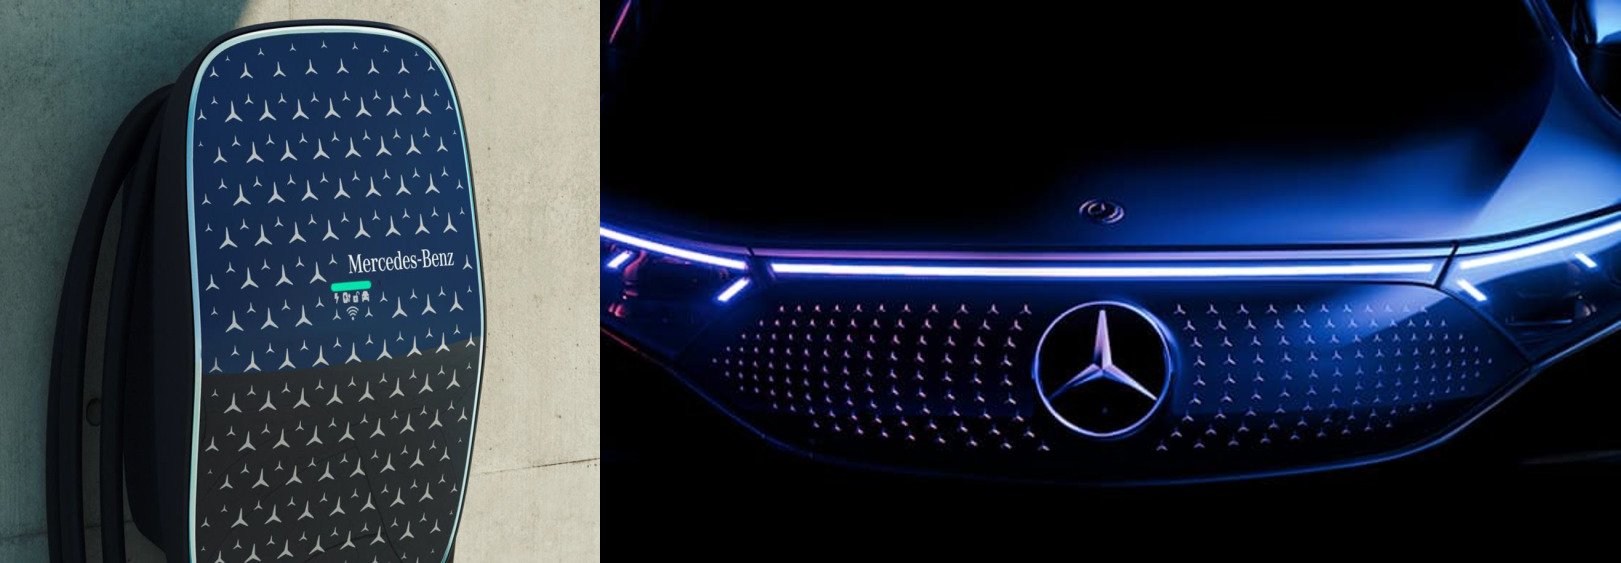 Mercedes-Benz charging wallbox design.